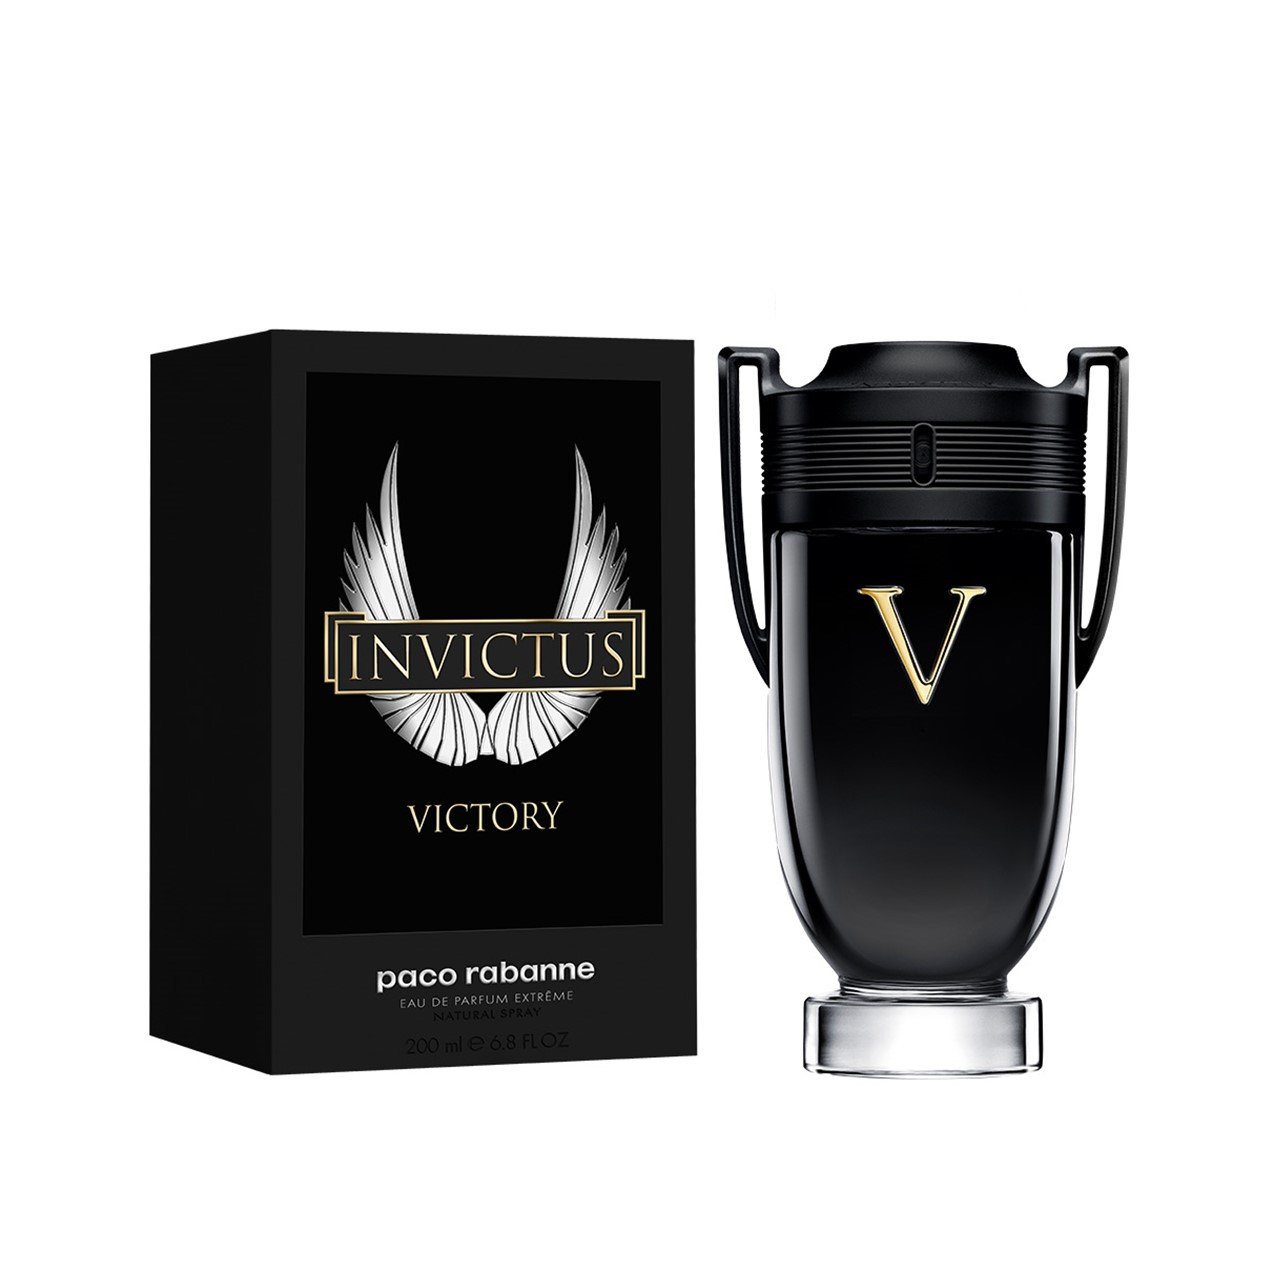 Eau Buy Extrême · Victory USA (6.8fl Rabanne Parfum De Invictus Paco 200ml oz)